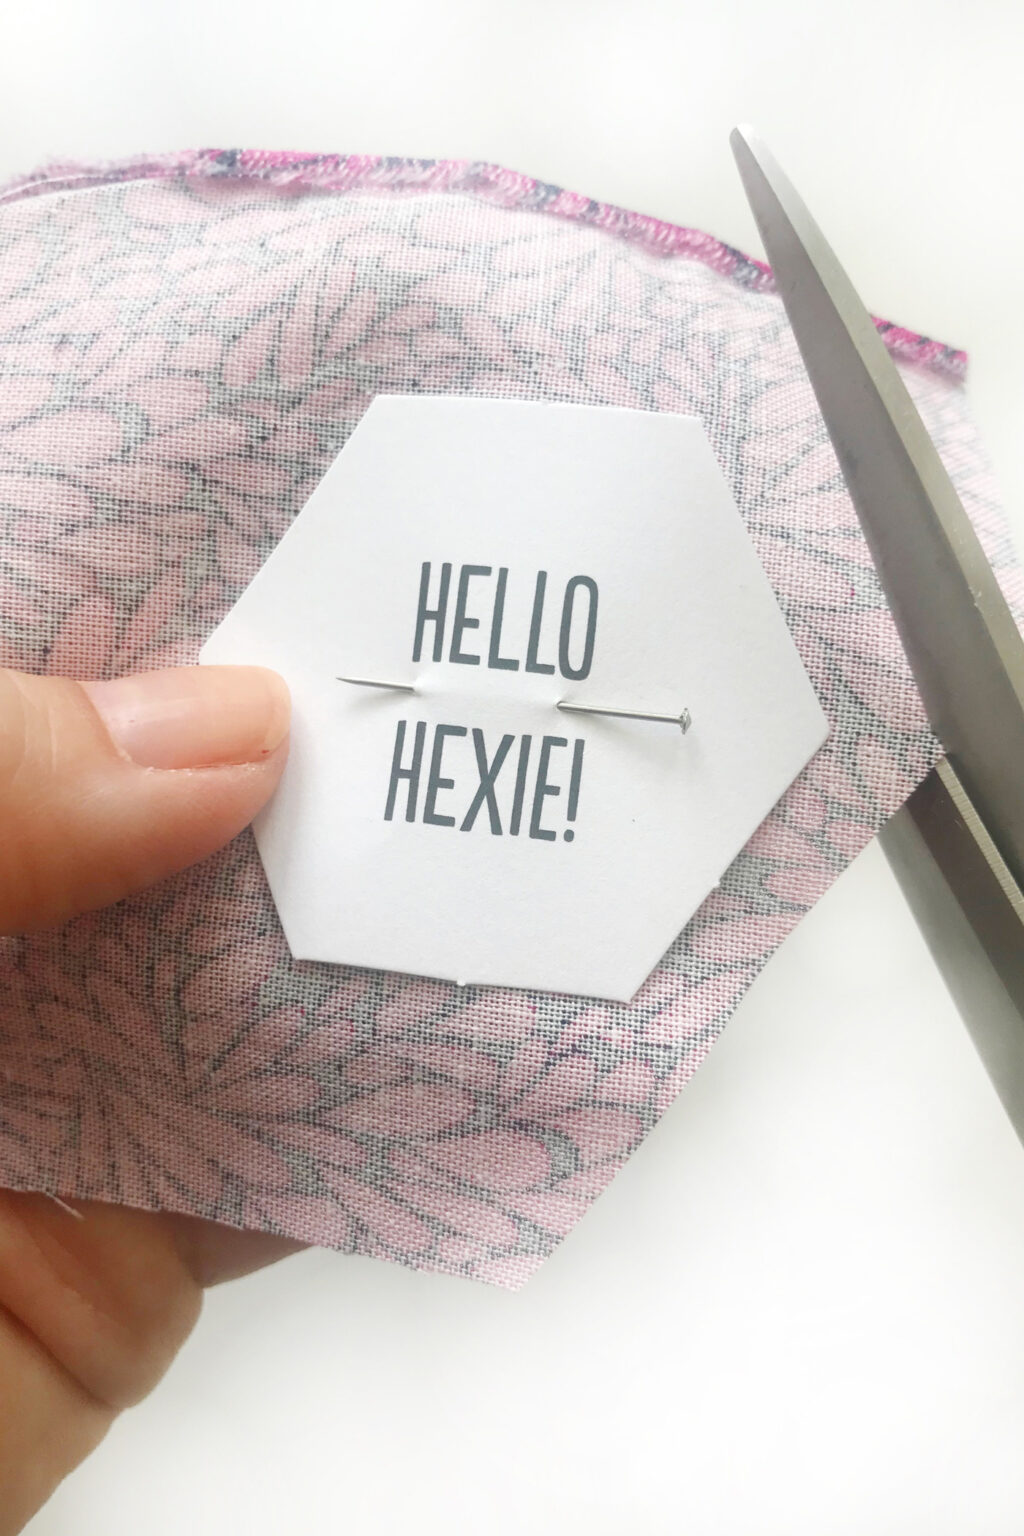 Embroidered Hexie Mug Rug Pattern - The Polka Dot Chair